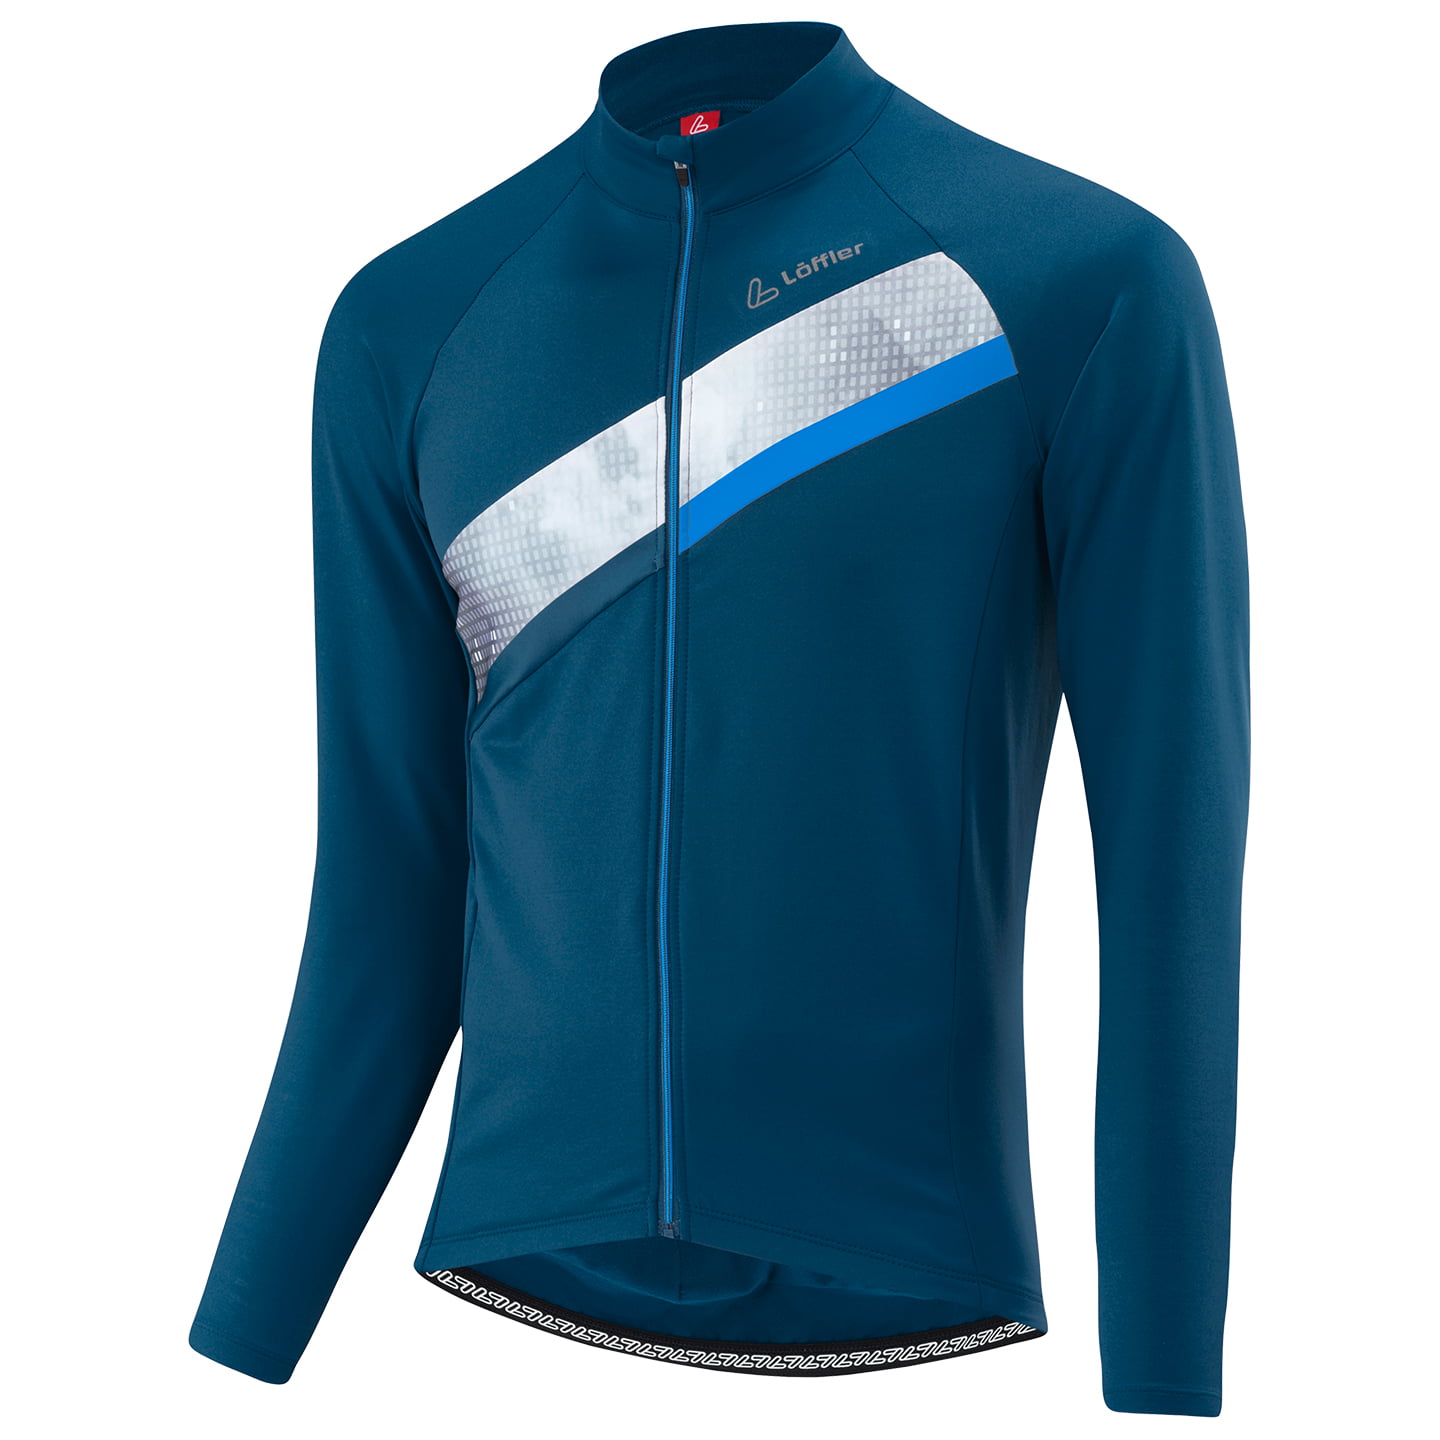 LOFFLER EVO22 Long Sleeve Jersey Long Sleeve Jersey, for men, size M, Cycling jersey, Cycling clothing